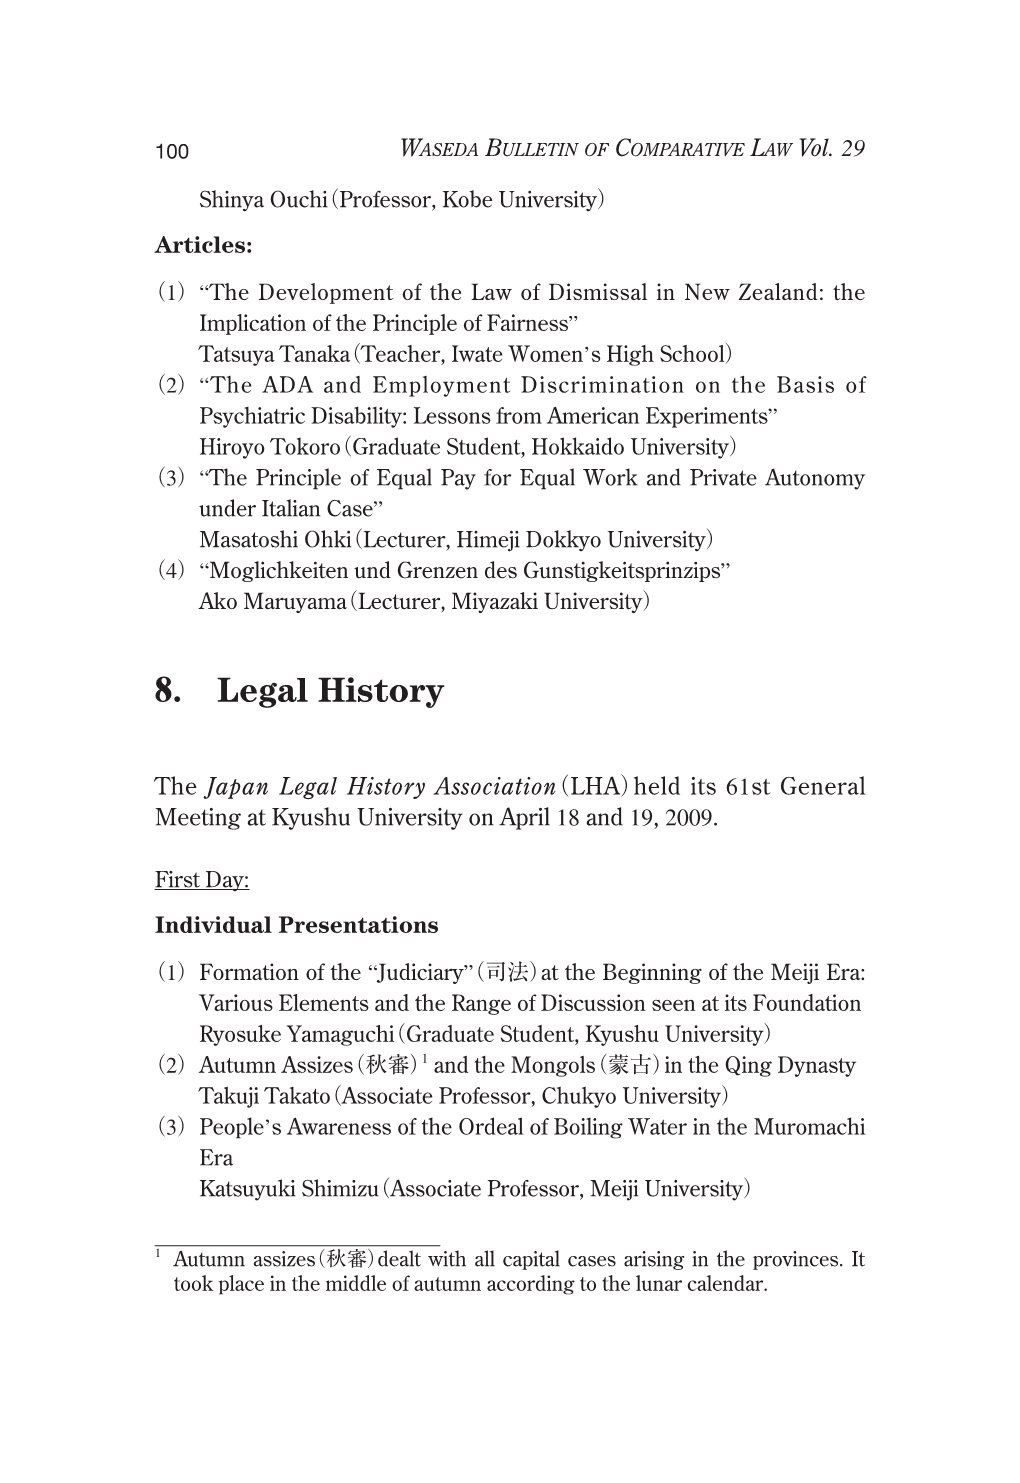 8. Legal History